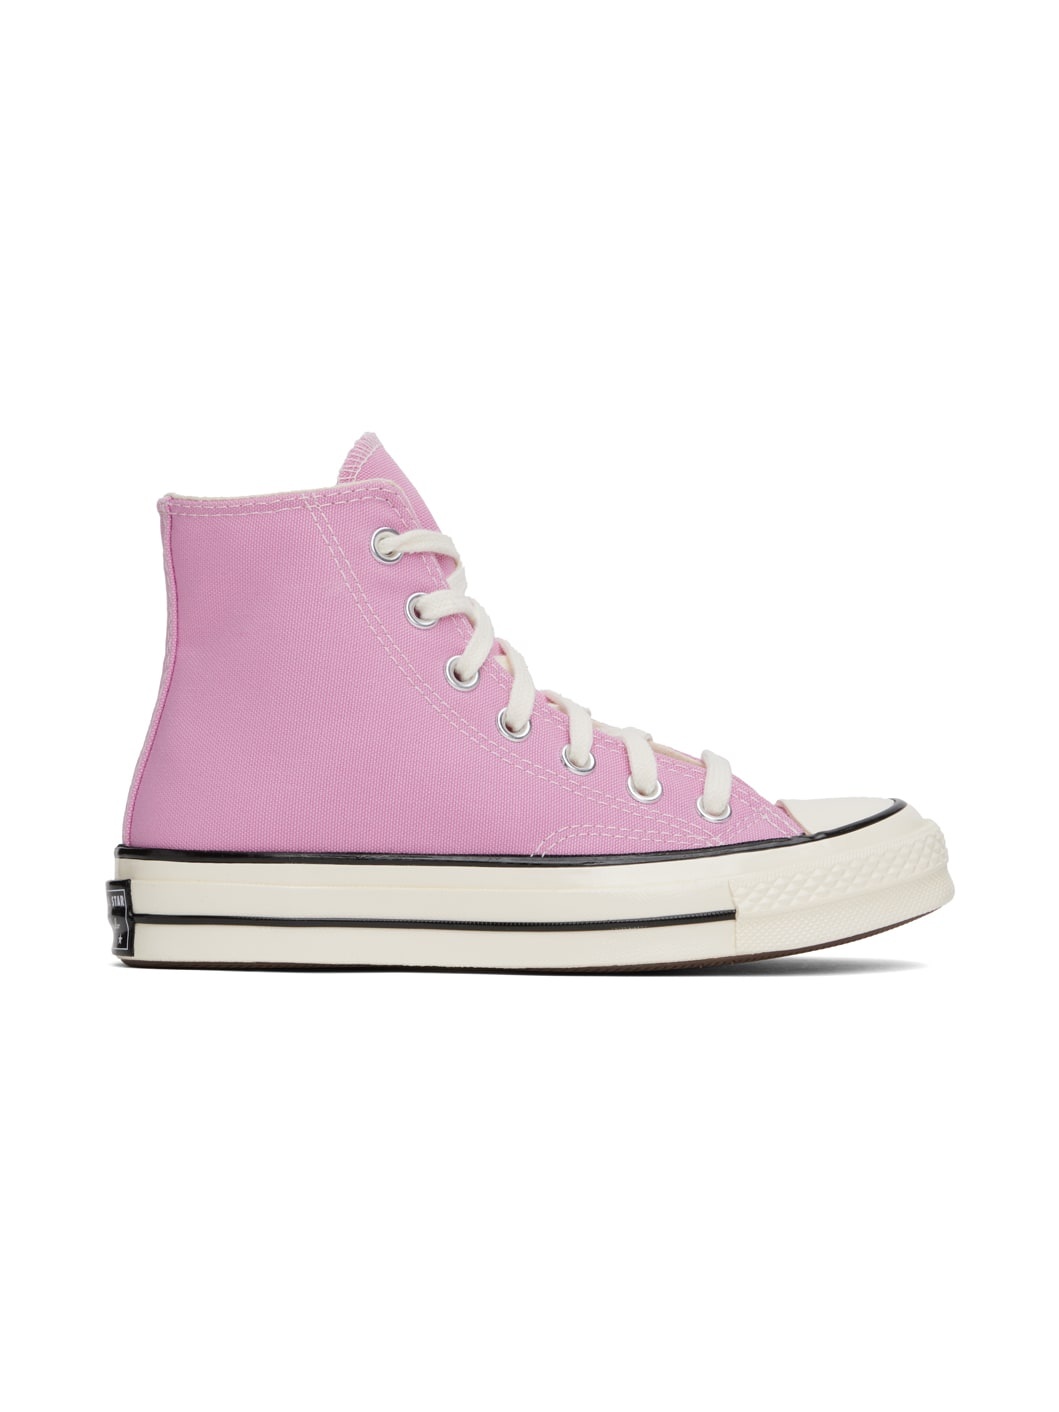 Pink Chuck 70 Seasonal Color Sneakers - 1